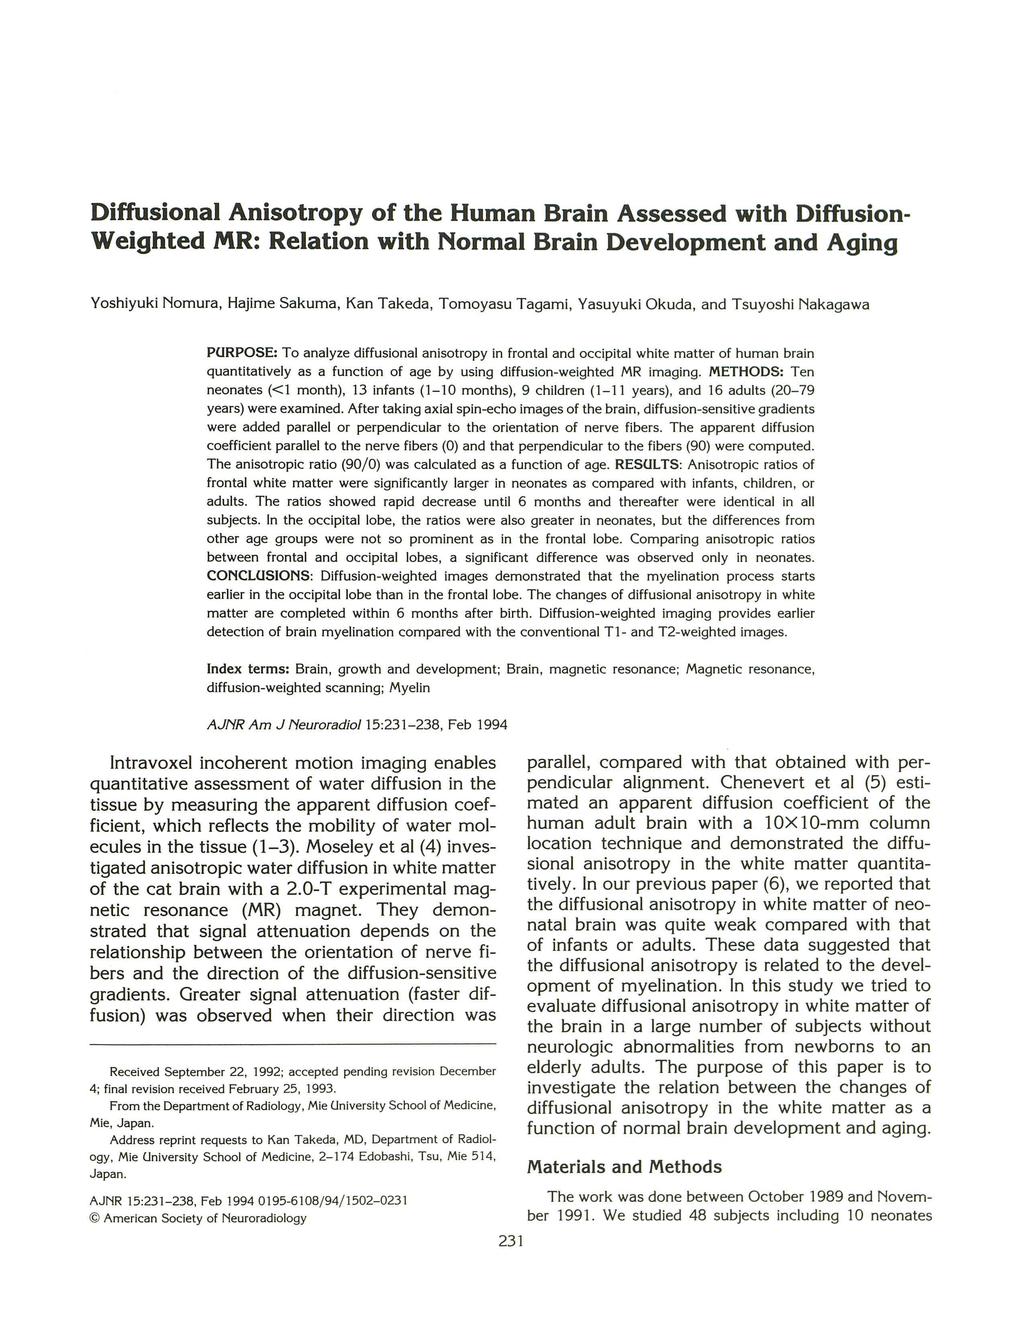 Diffusional Anisotropy of the Human Brain Assessed with Diffusion Weighted MR: Relation with Normal Brain Development and Aging Yoshiyuki Nomura, Hajime Sakuma, Kan Takeda, Tomoyasu Tagami, Yasuyuki